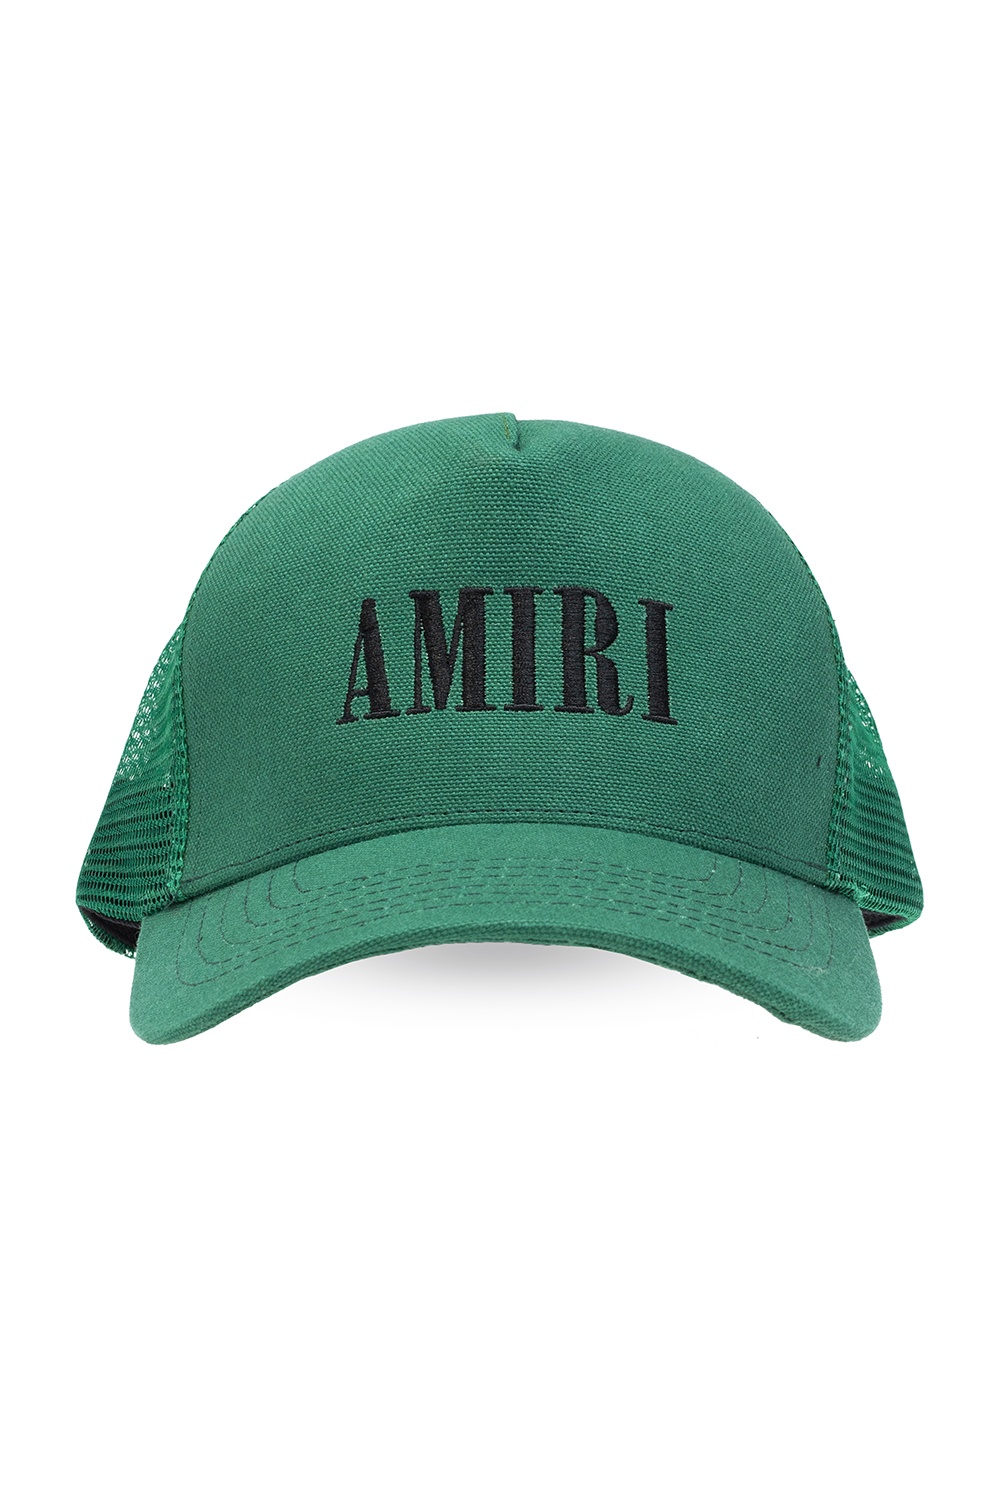 Amiri hat eyewear Yellow 41 wallets T Shirts